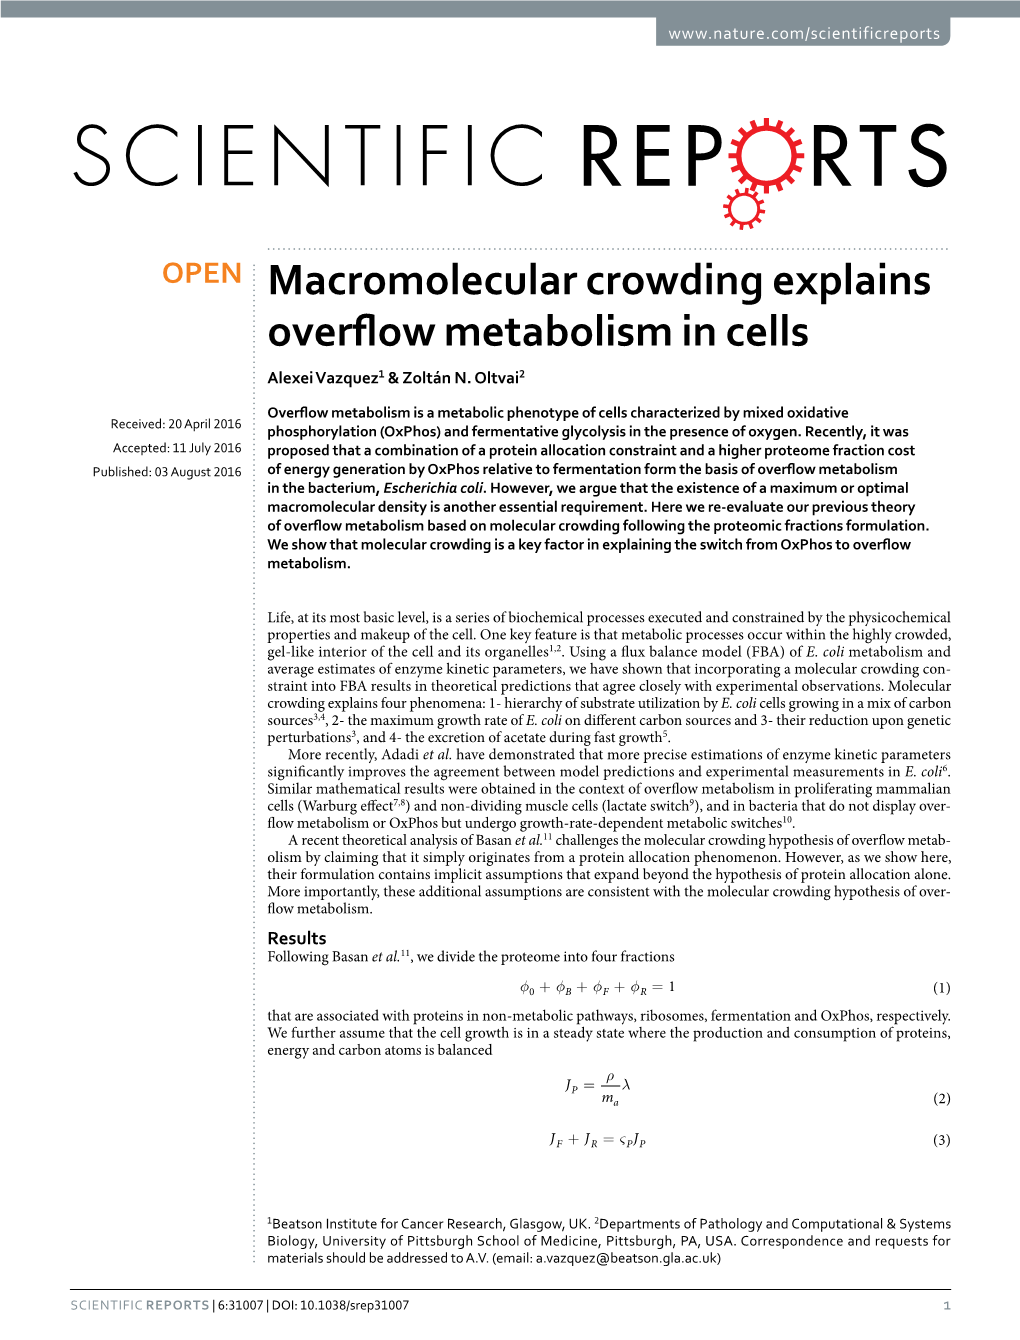 Macromolecular Crowding Explains Overflow Metabolism in Cells Alexei Vazquez1 & Zoltán N